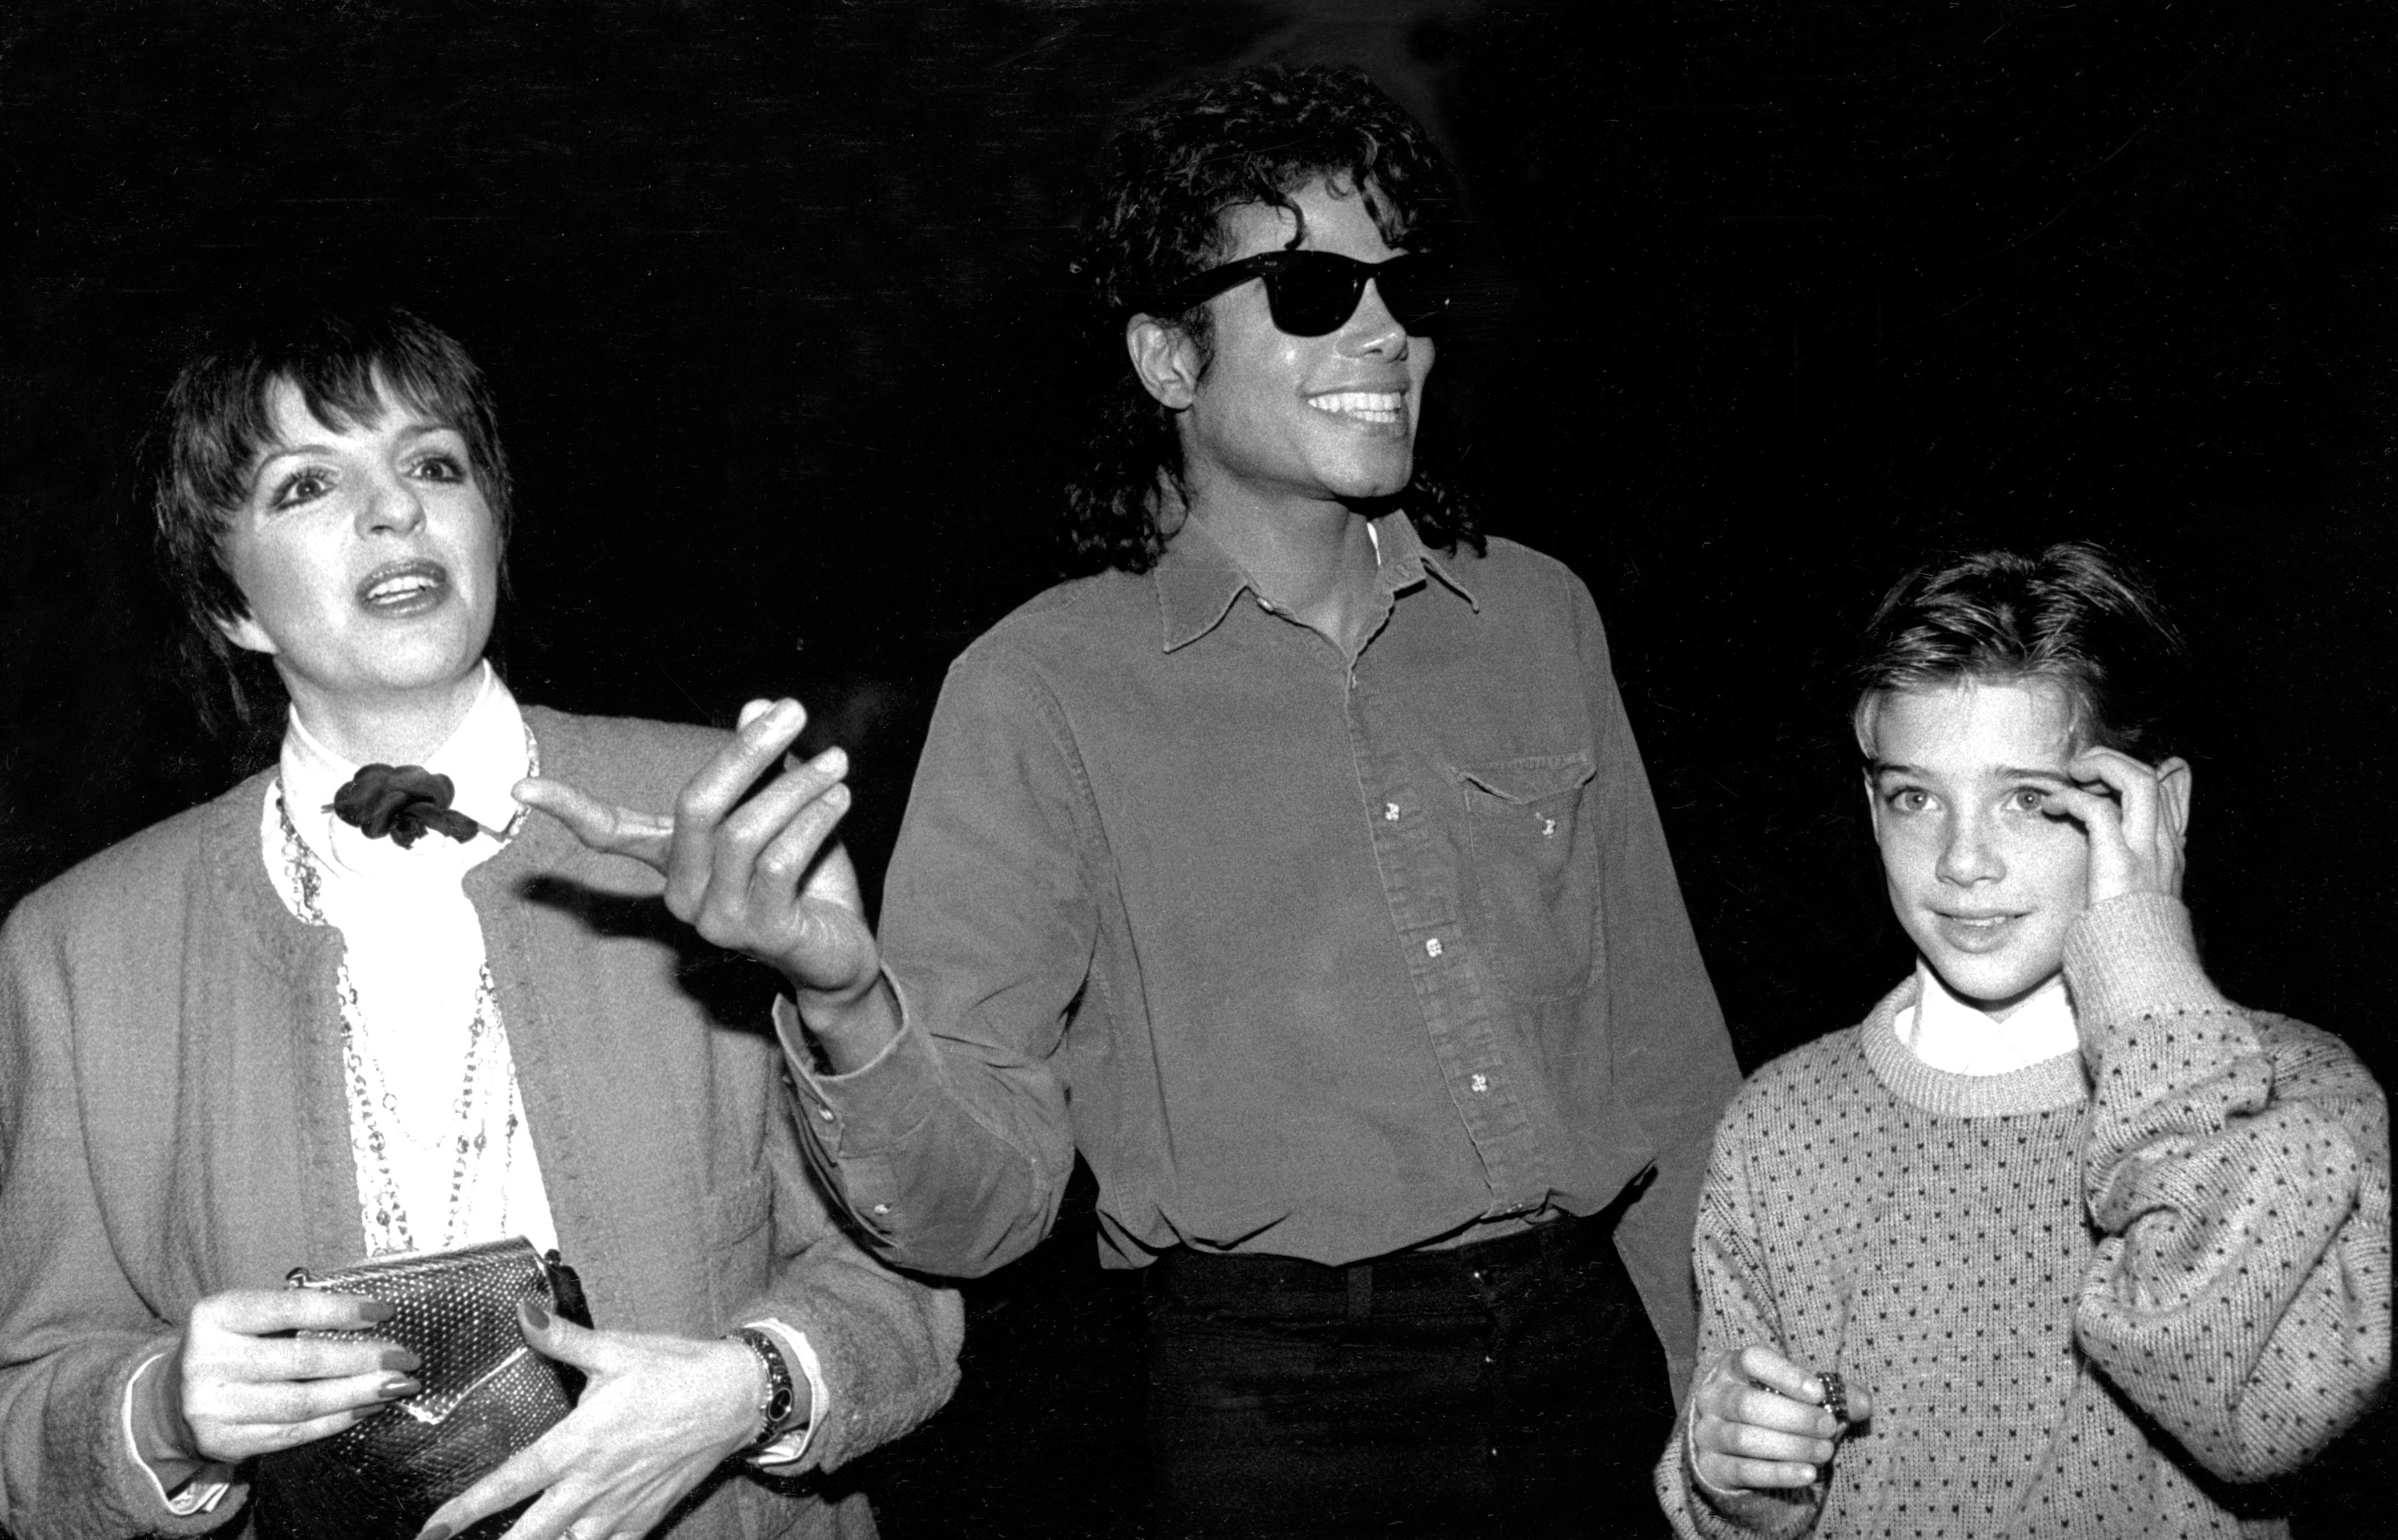 Michael Jackson and Liza Minelli with Jimmy Safechuck